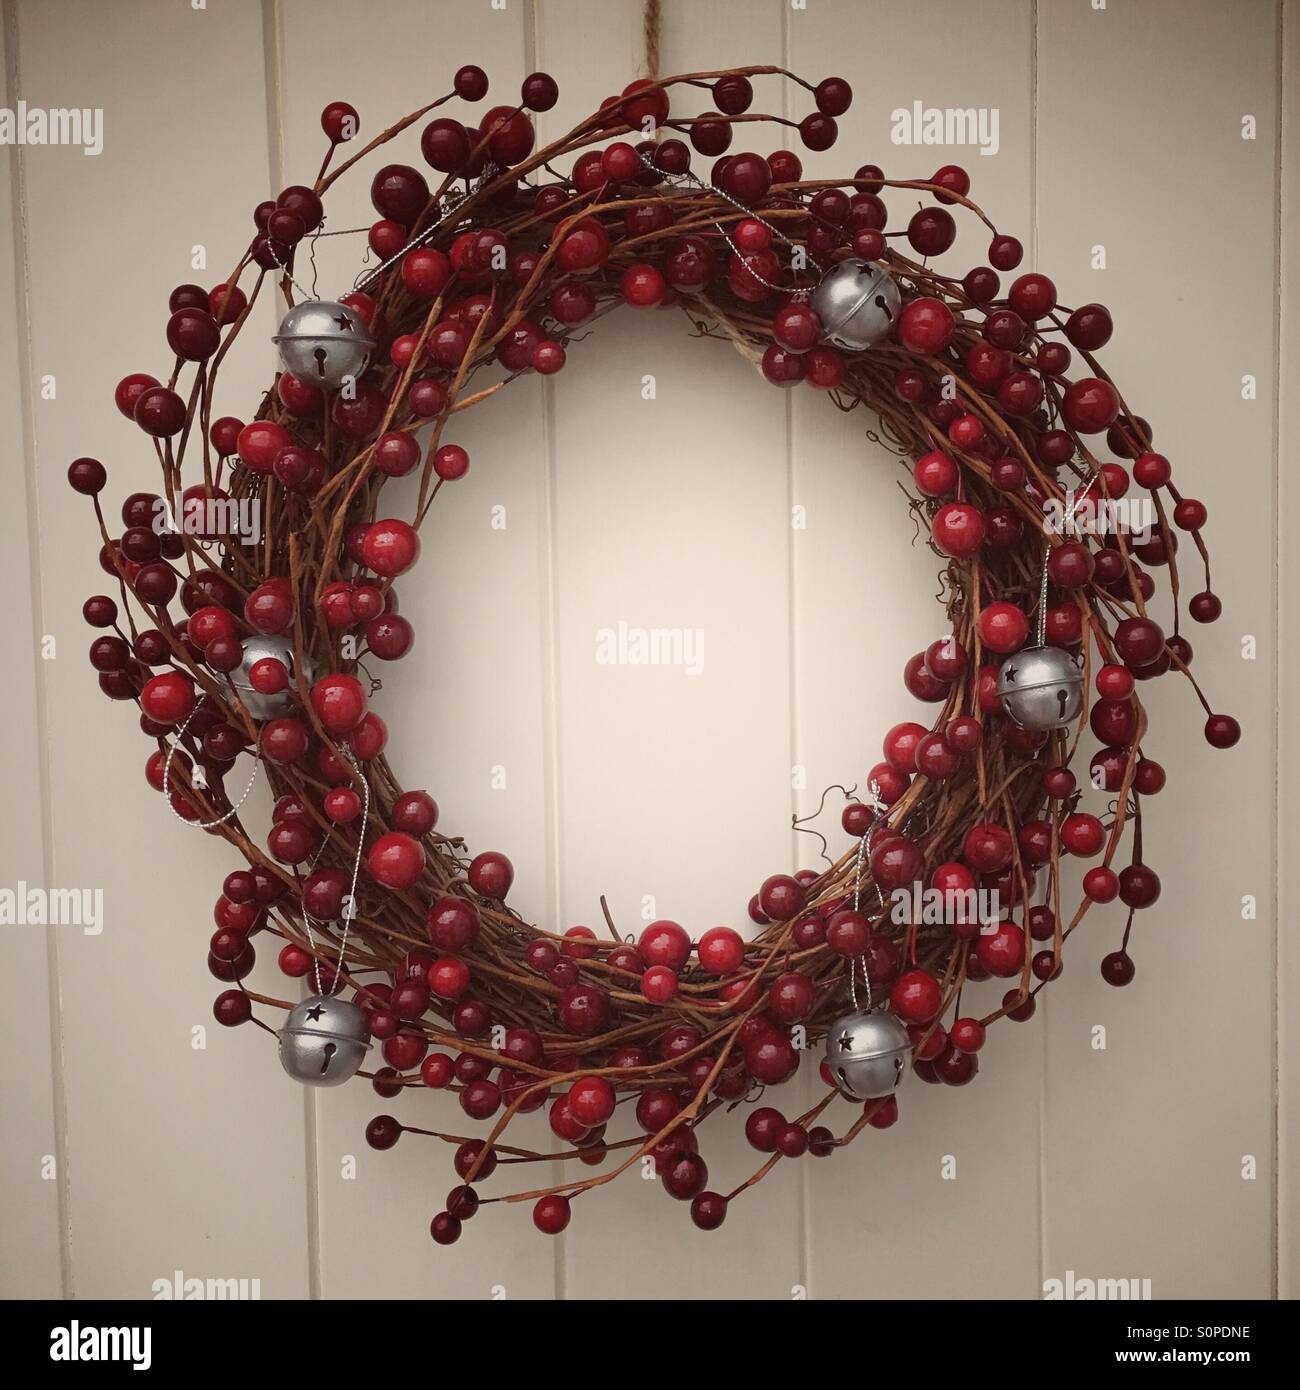 Christmas berry wreath Stock Photo